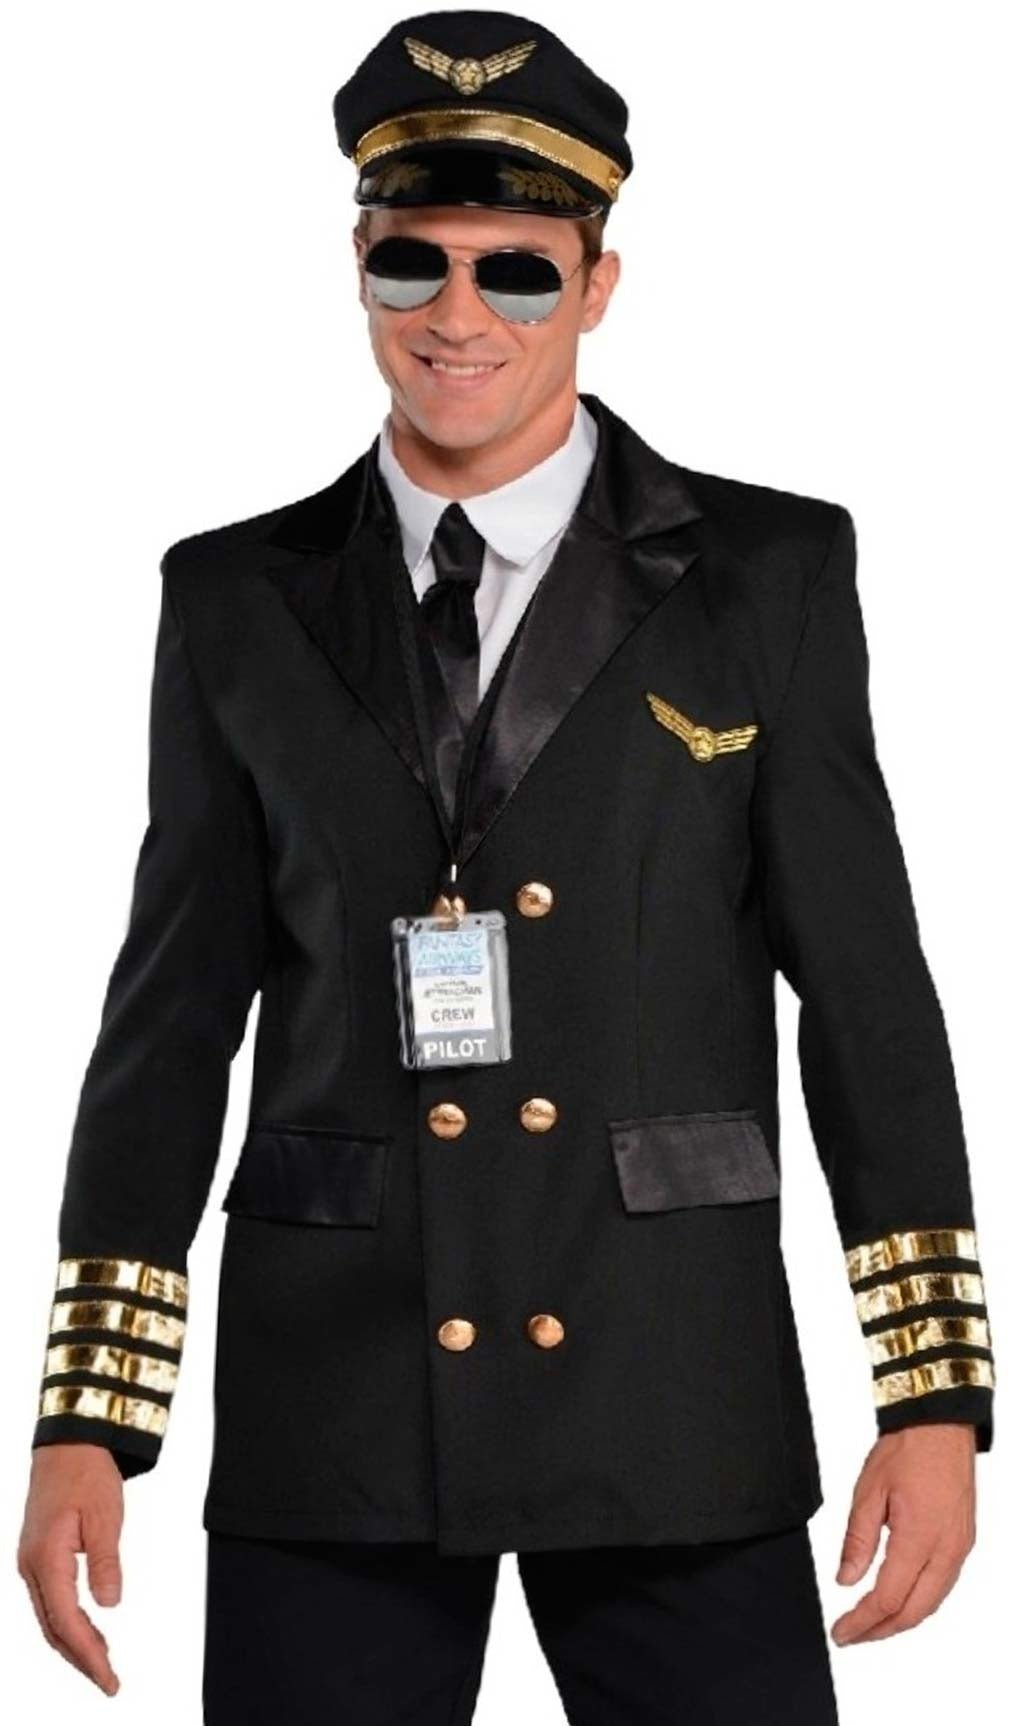 Disfraz de Piloto de Aviación para adulto